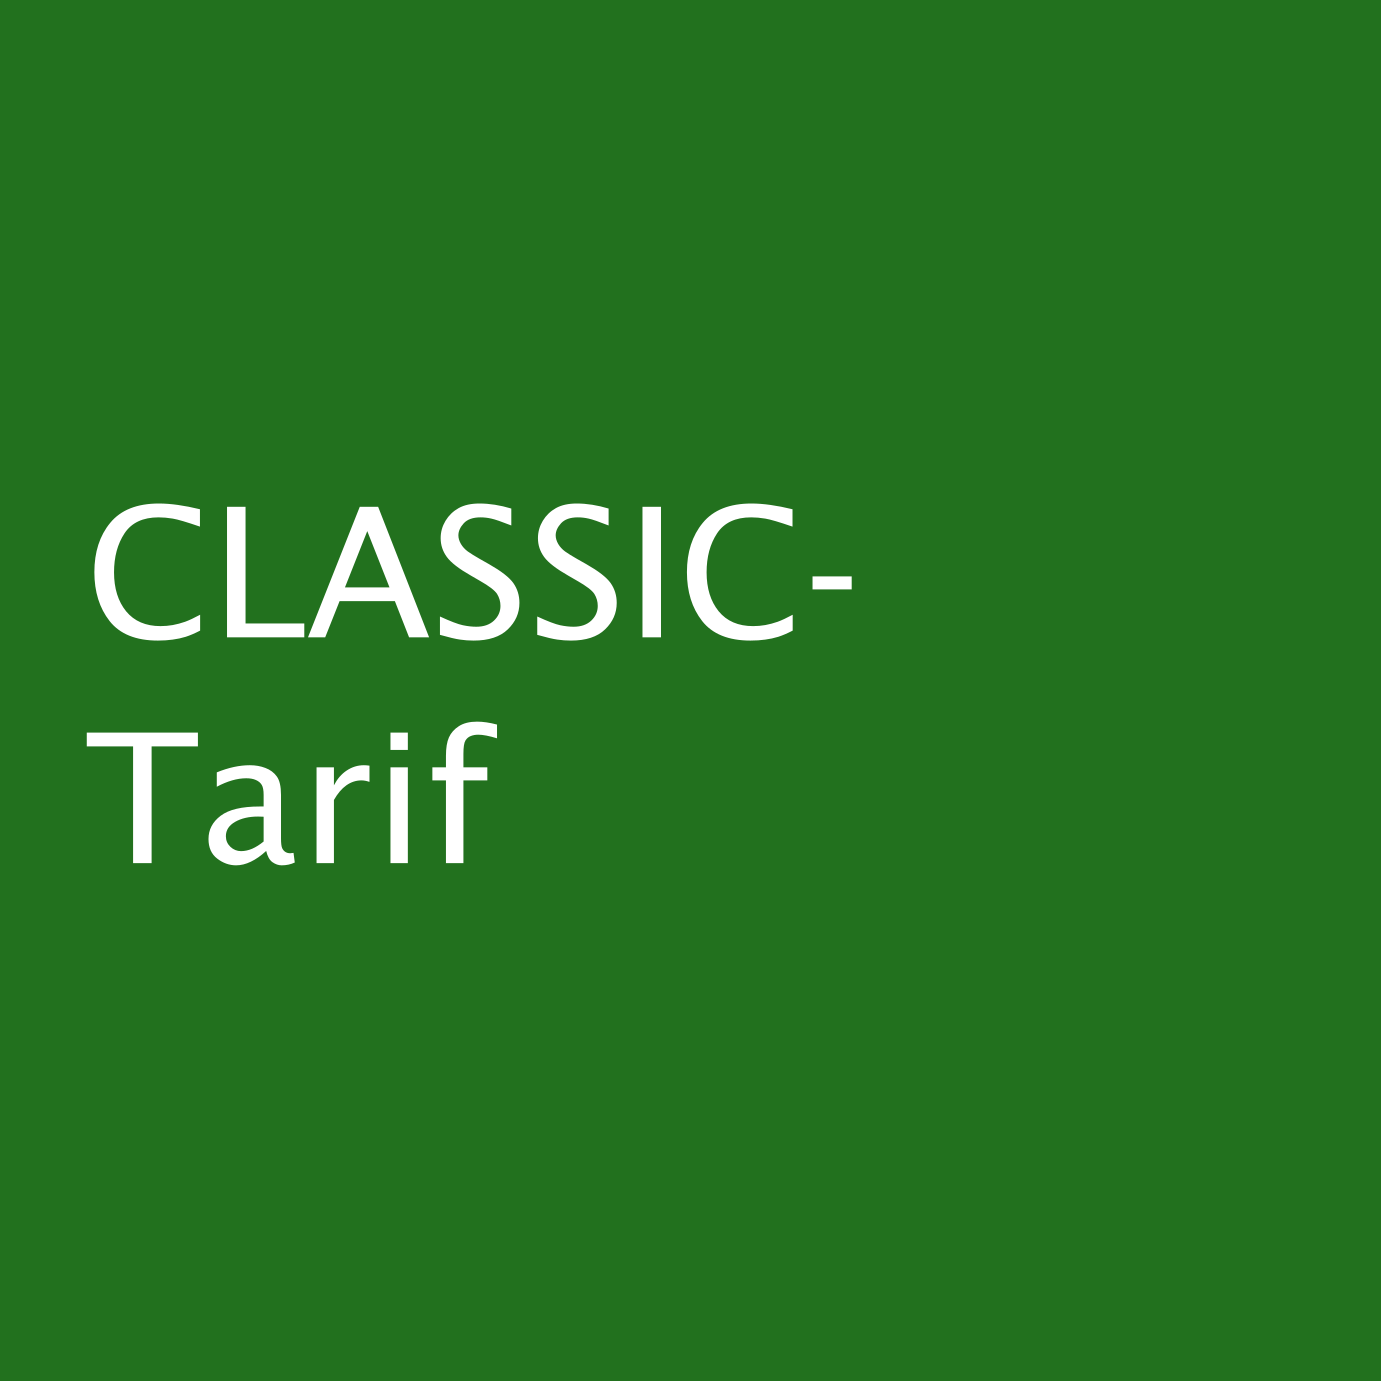 Classic-Tarif